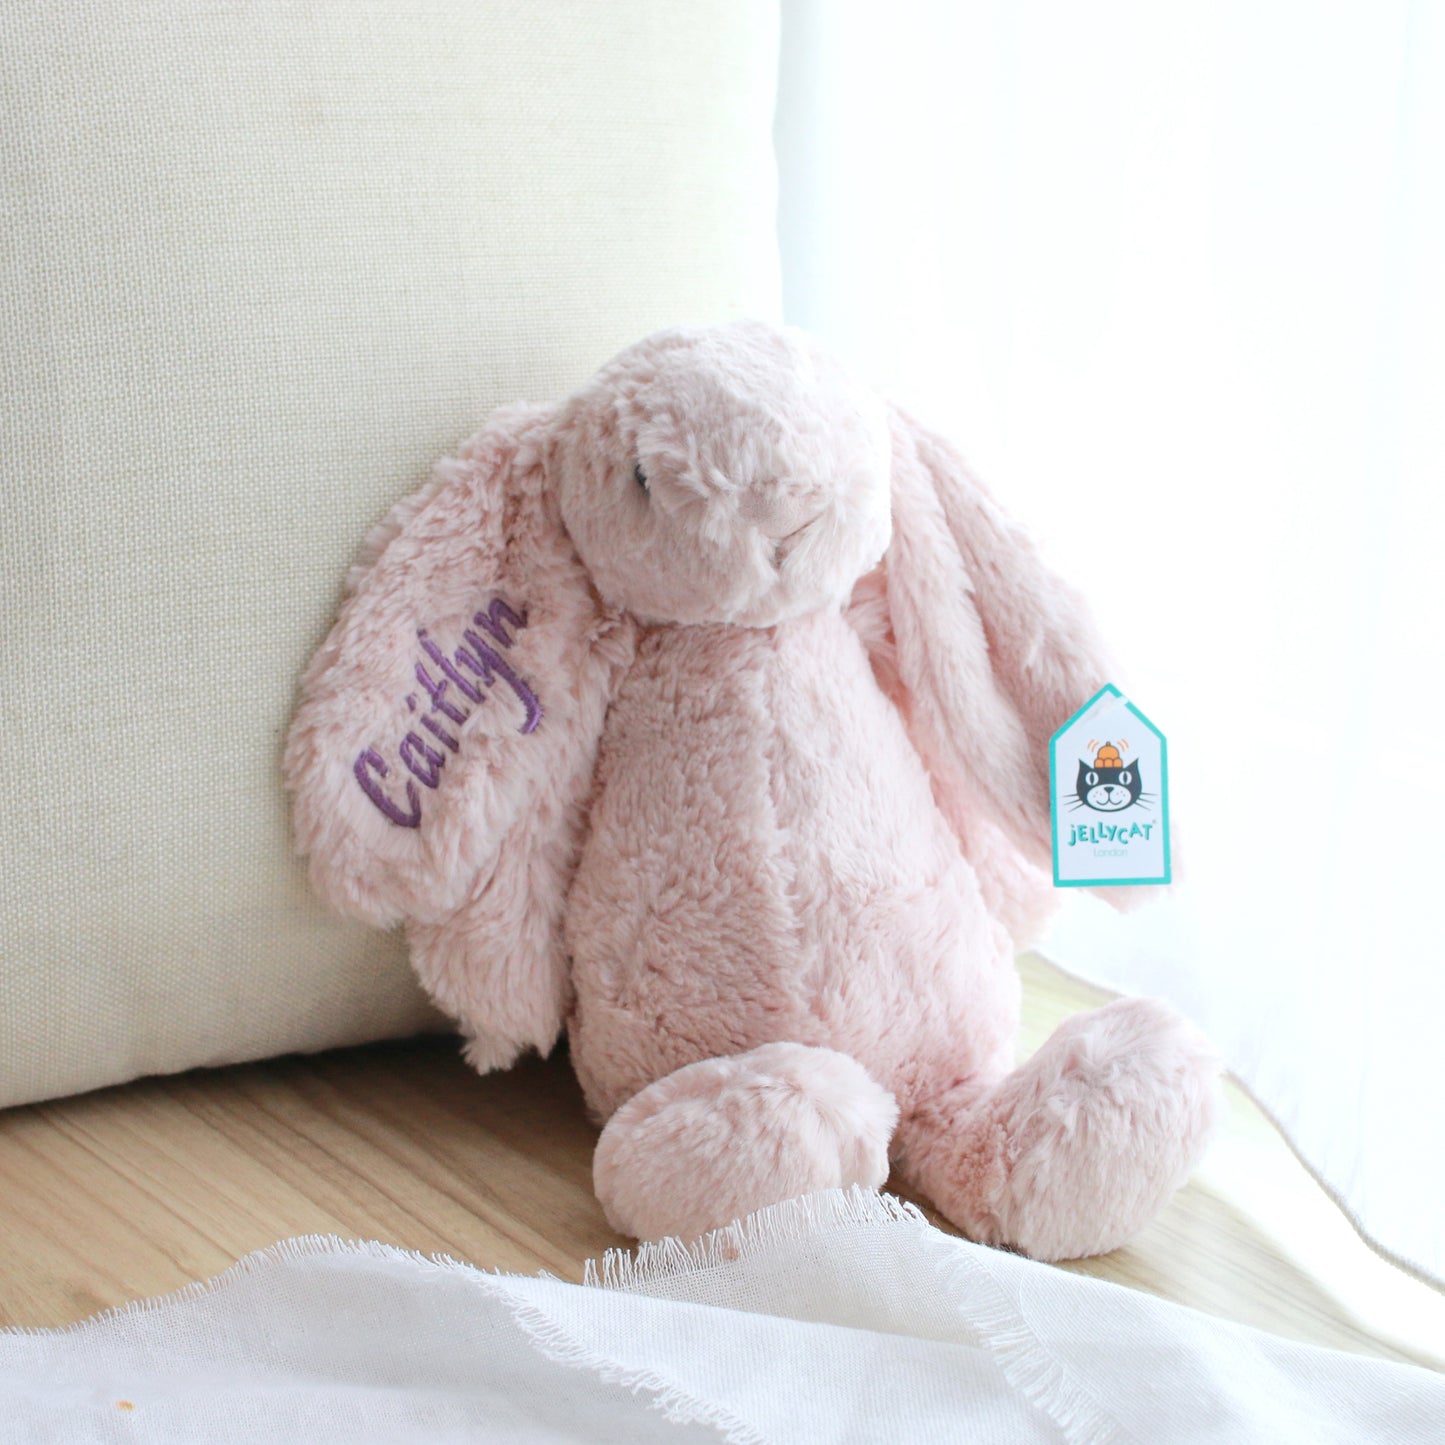 Personalised Jellycat Bunny - Medium Size